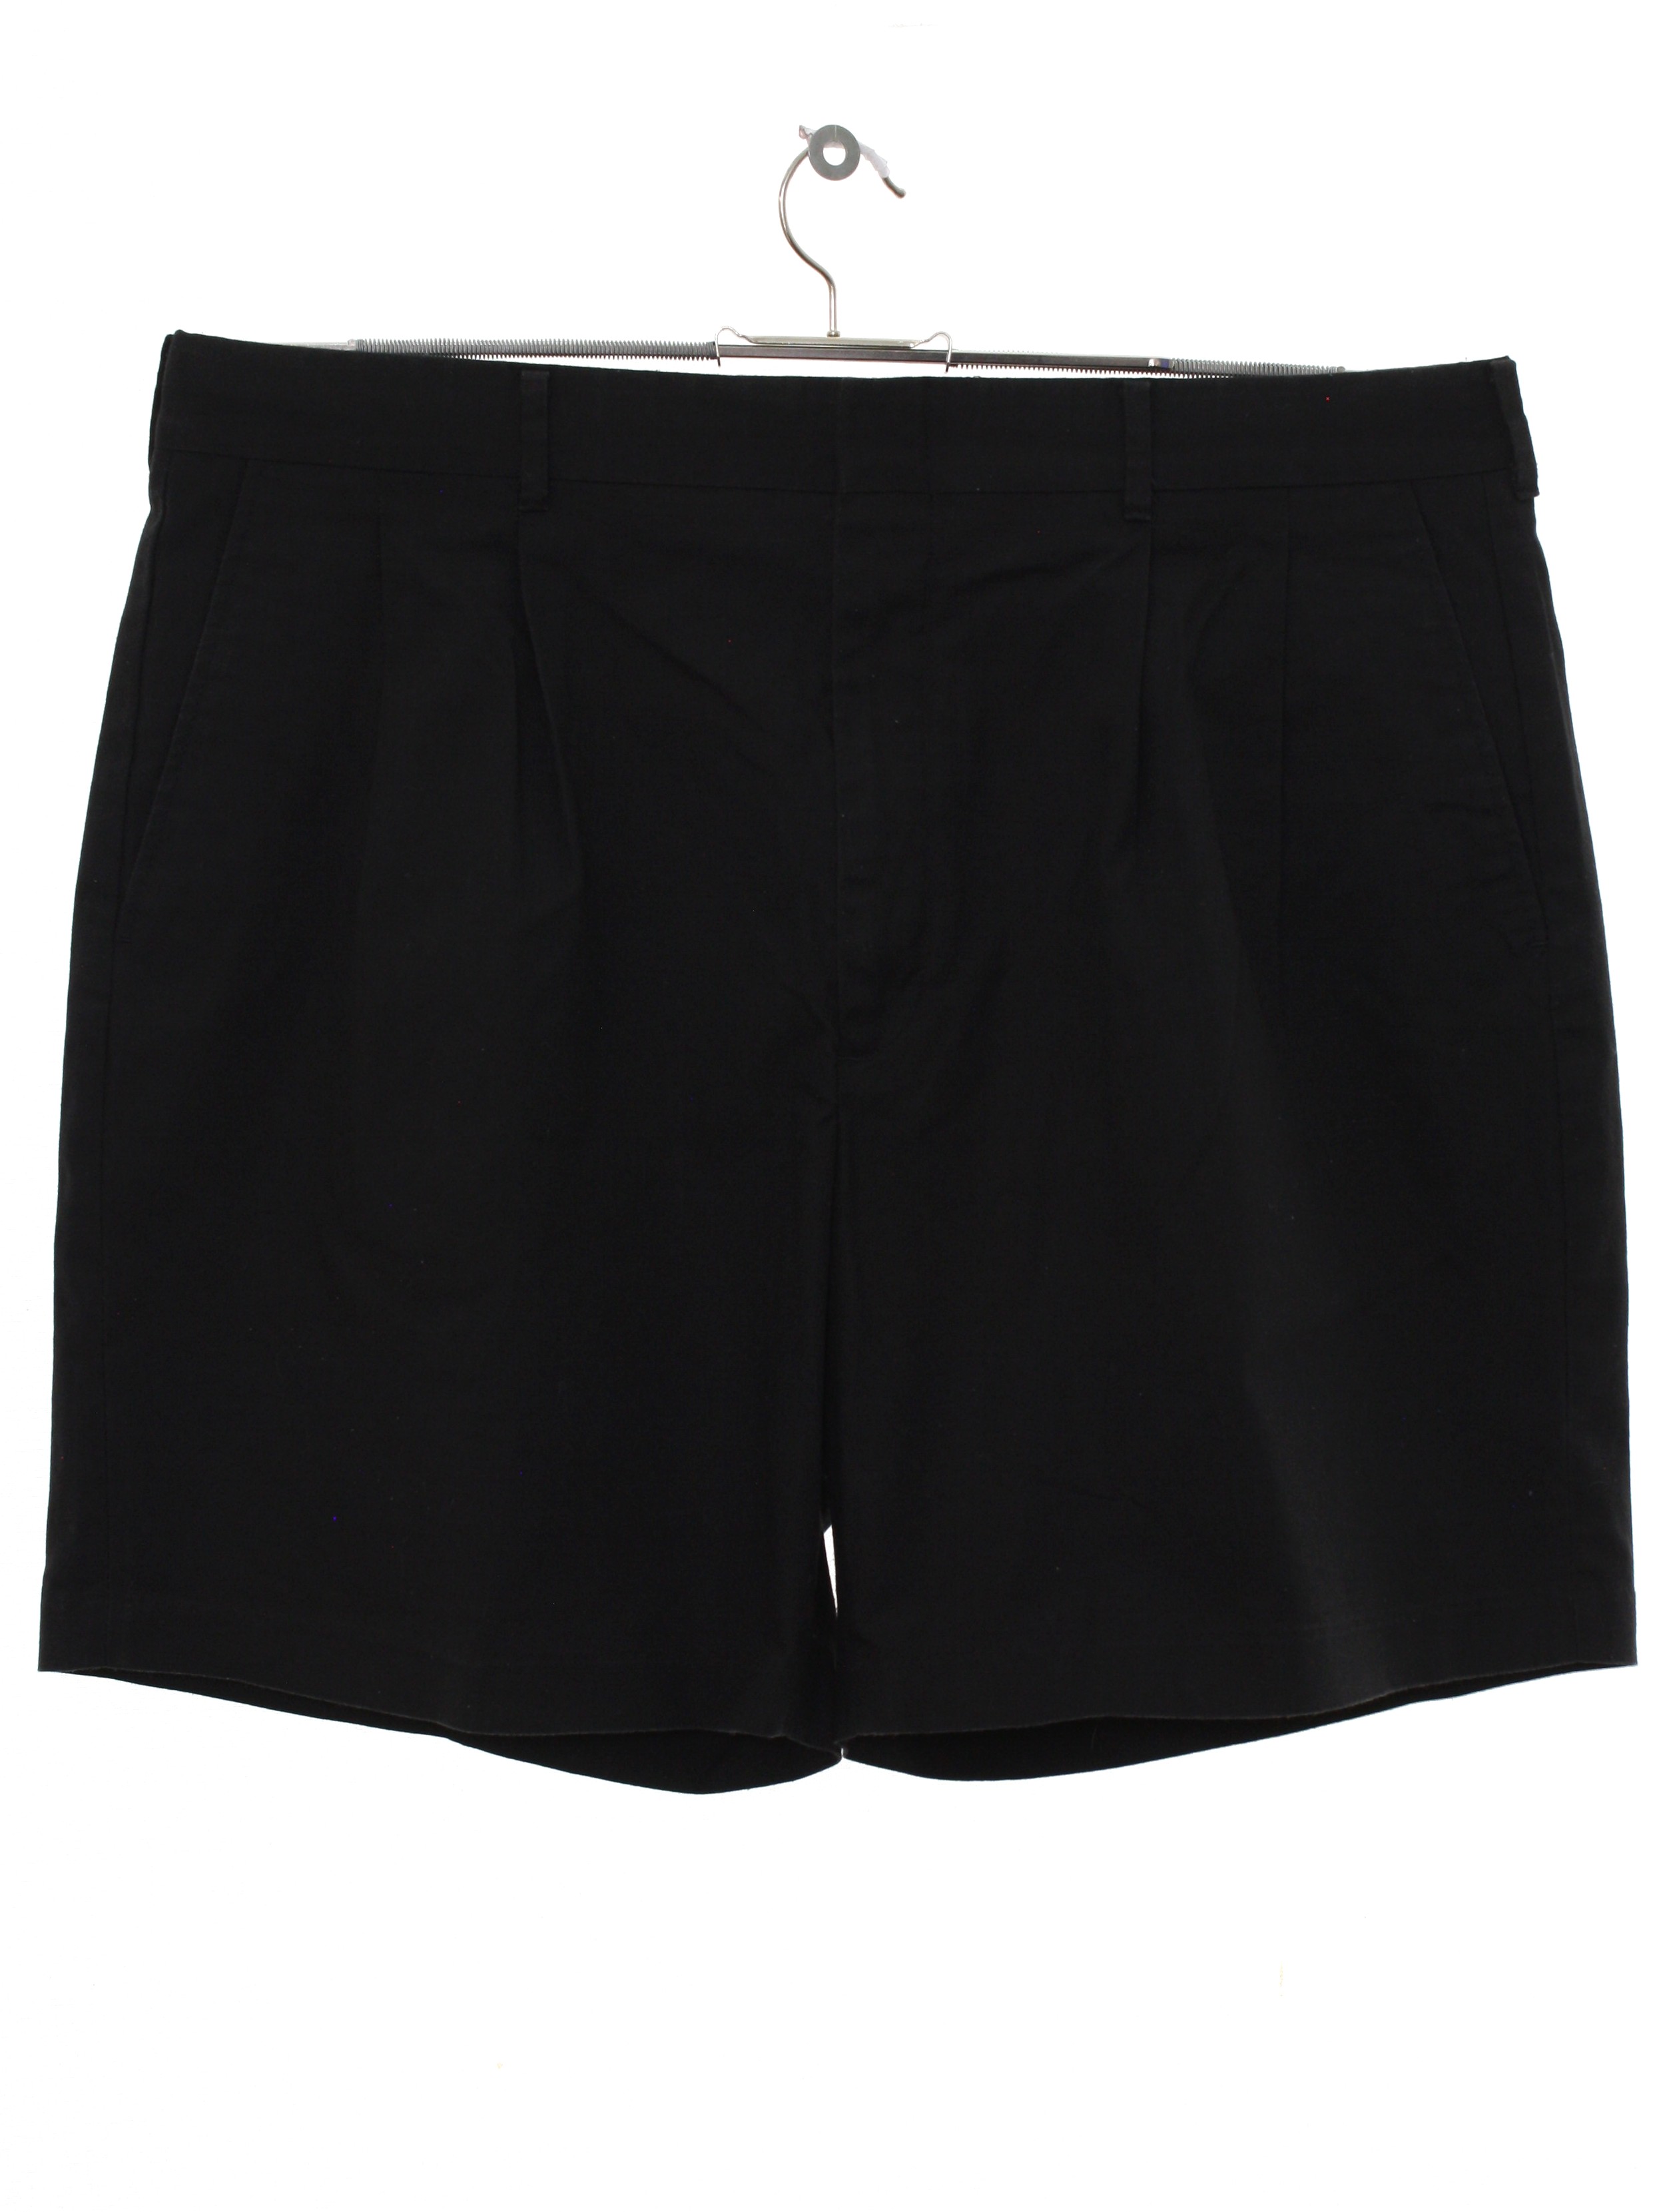 1980s Vintage Shorts: 80s -Knightsbridge- Mens black background cotton ...